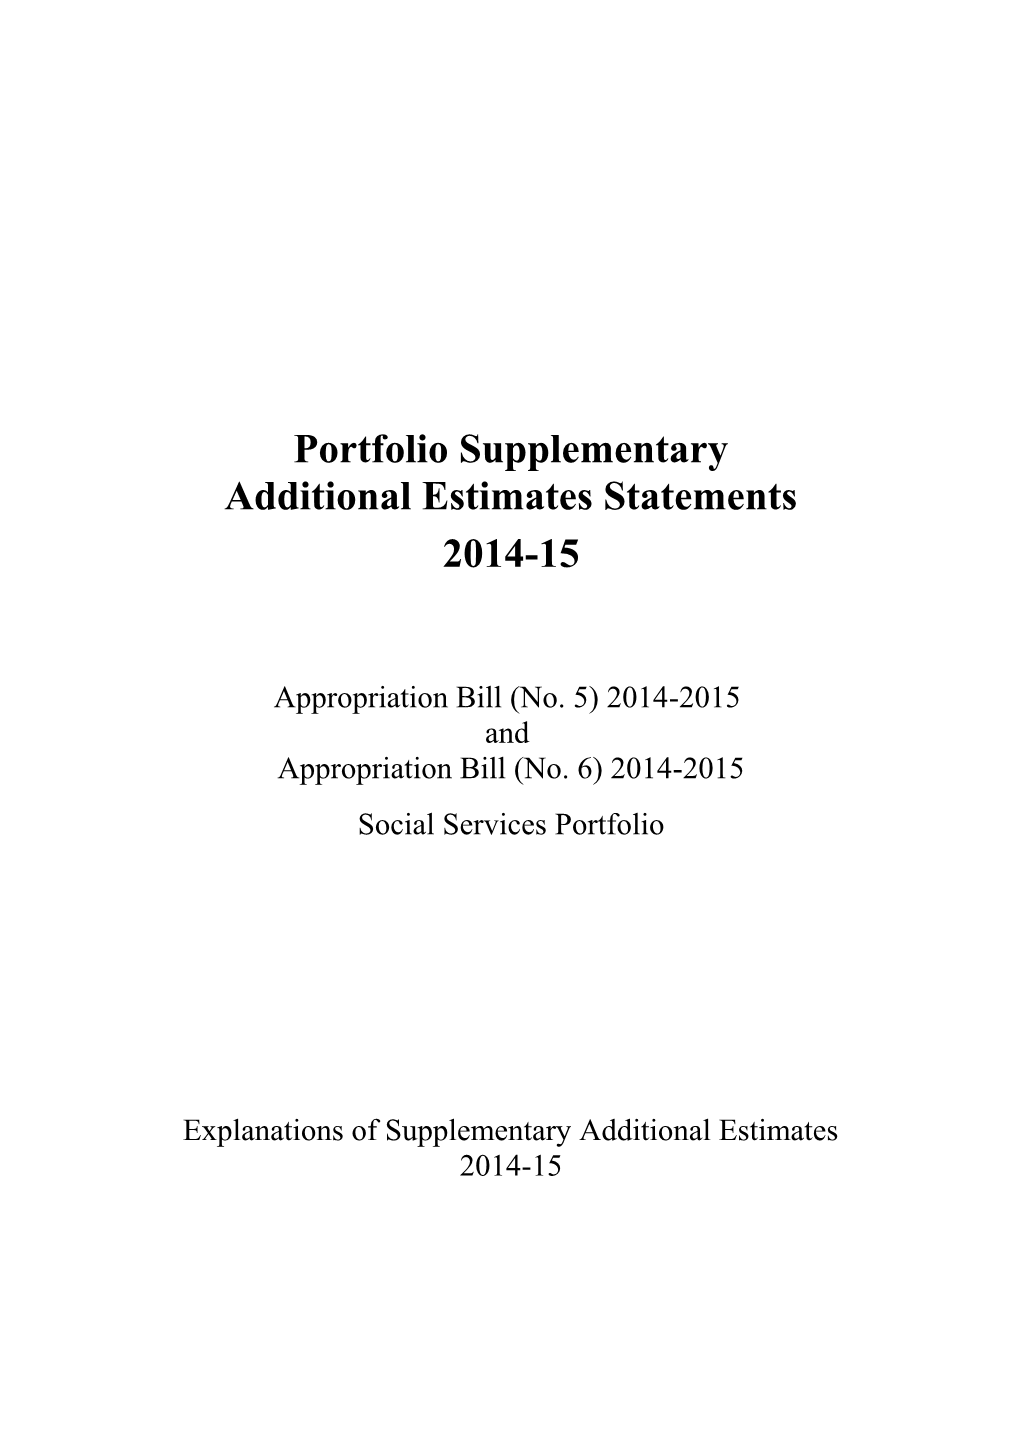 Portfolio Supplementary Additional Estimates Statements